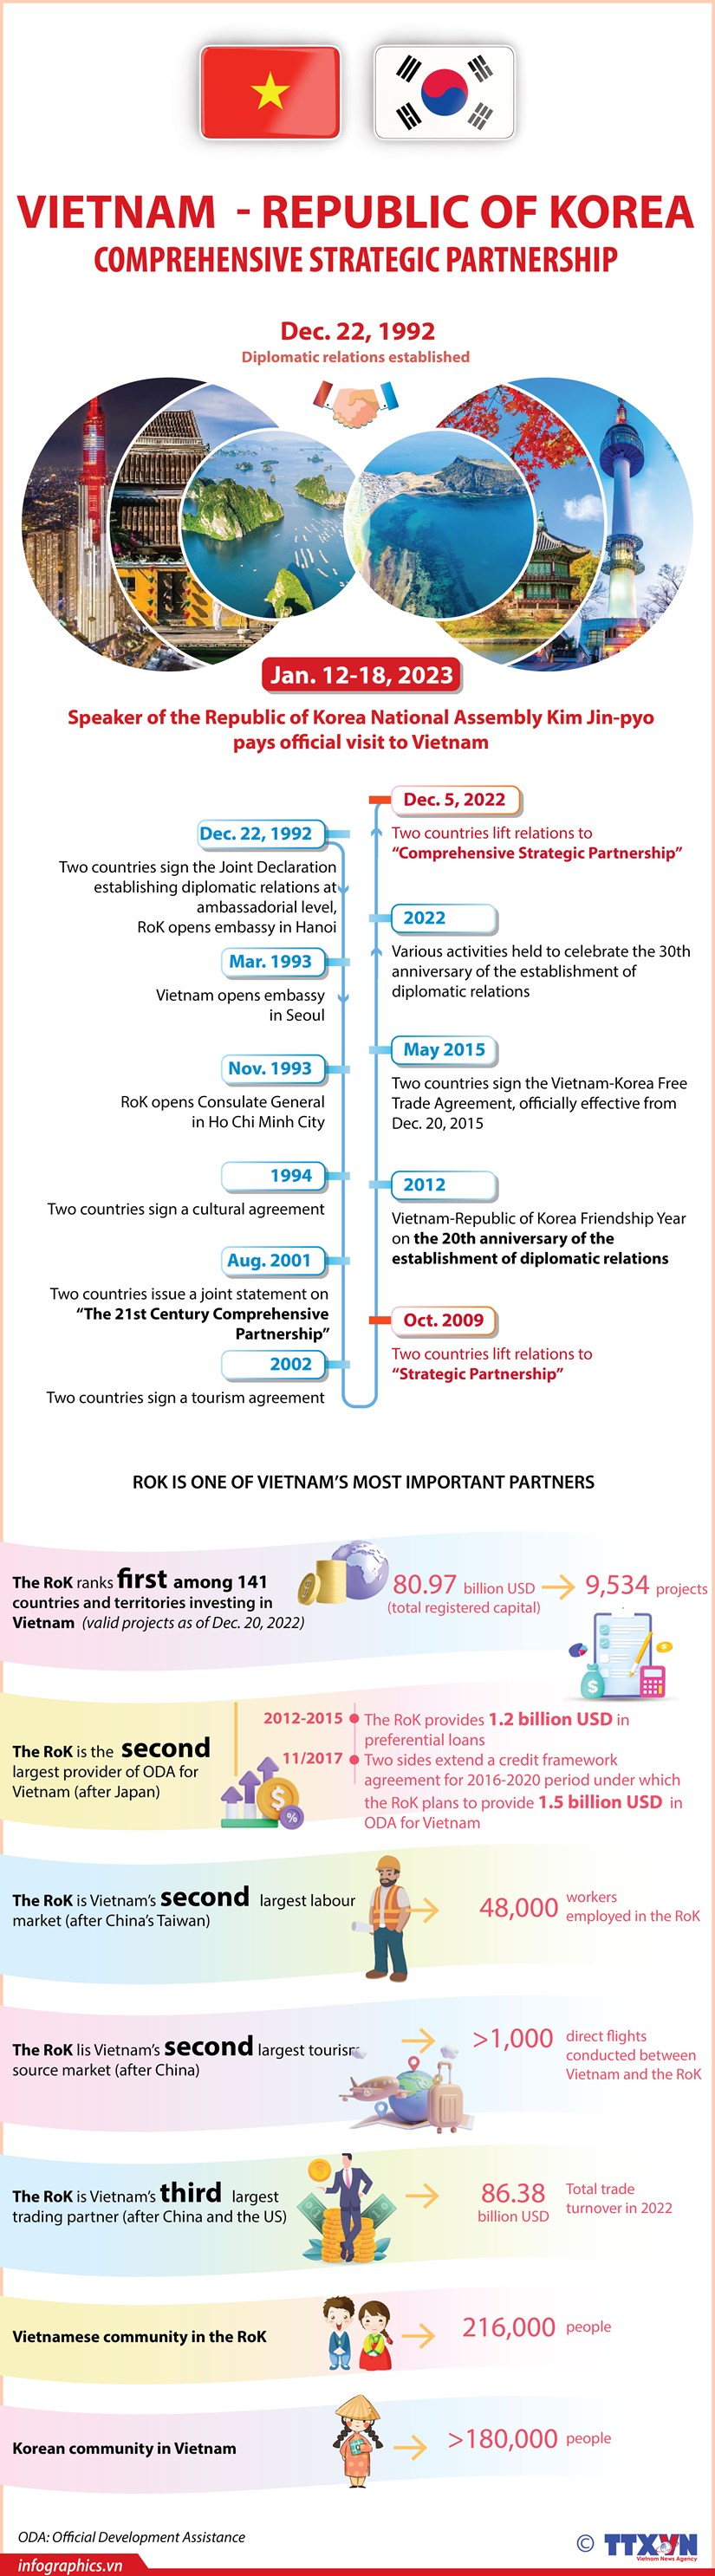 Vietnam - Republic of Korea Comprehensive Strategic Partnership hinh anh 1